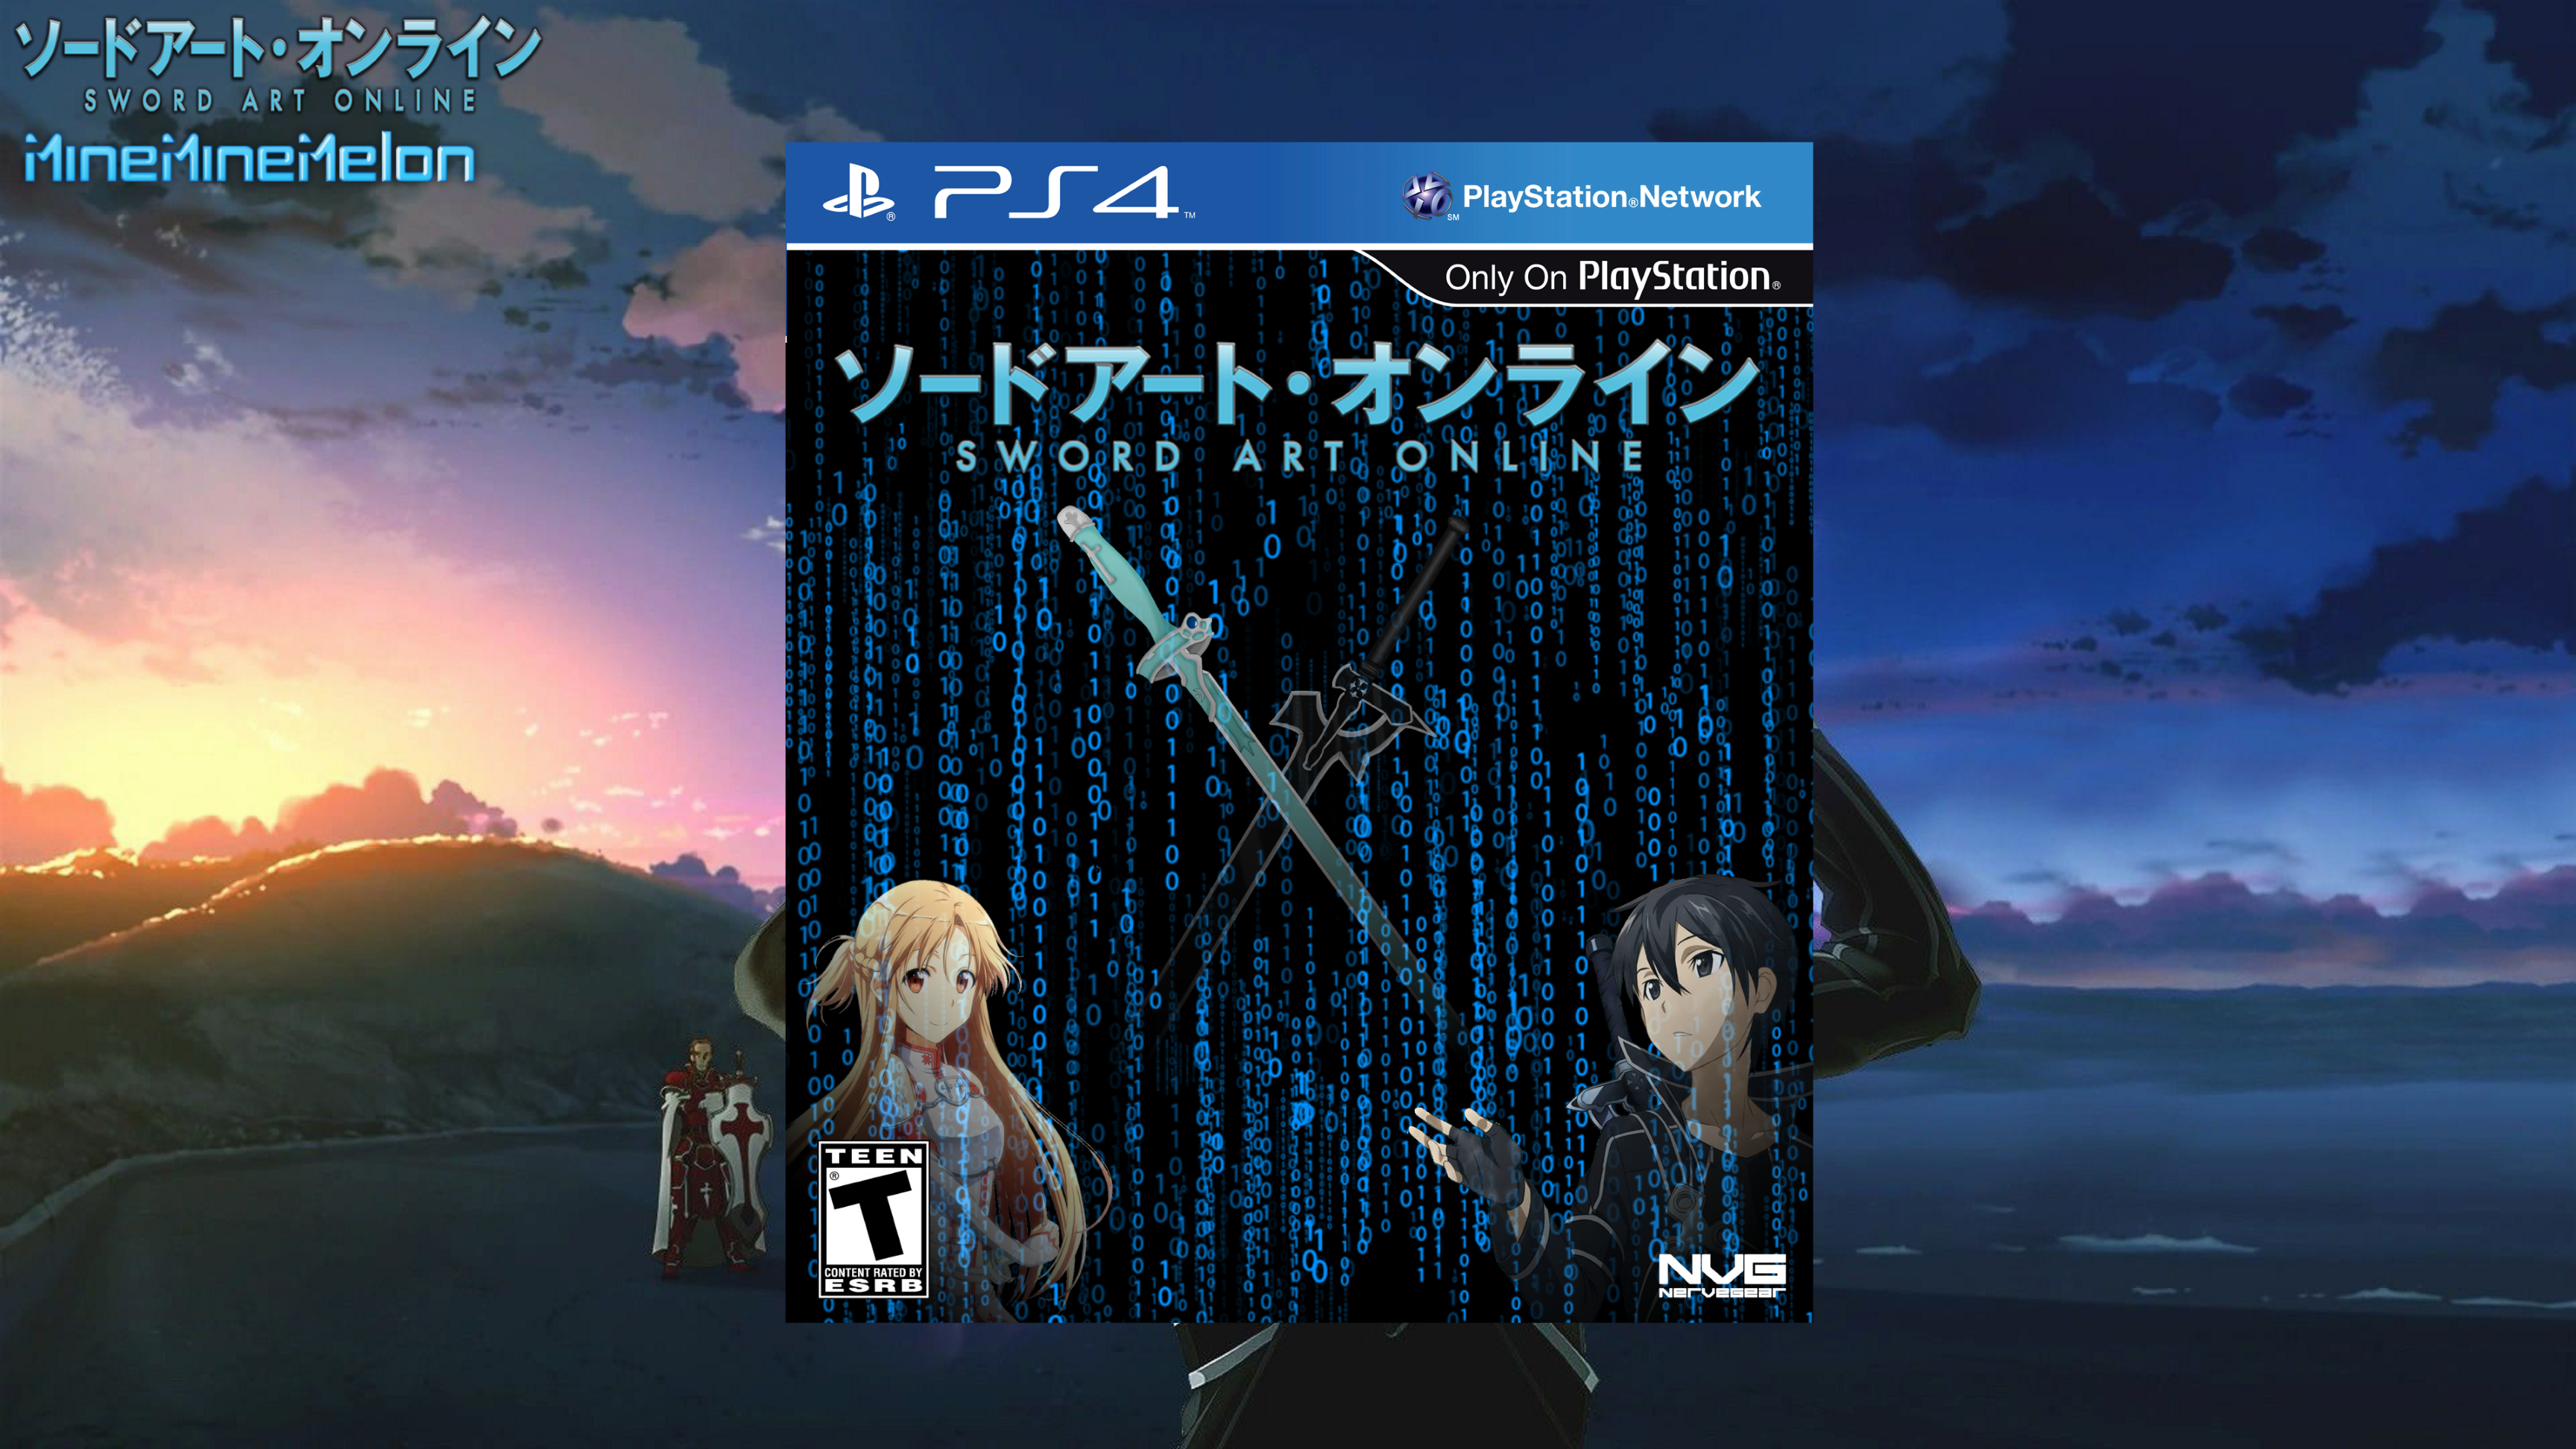 Sword Art Online box cover